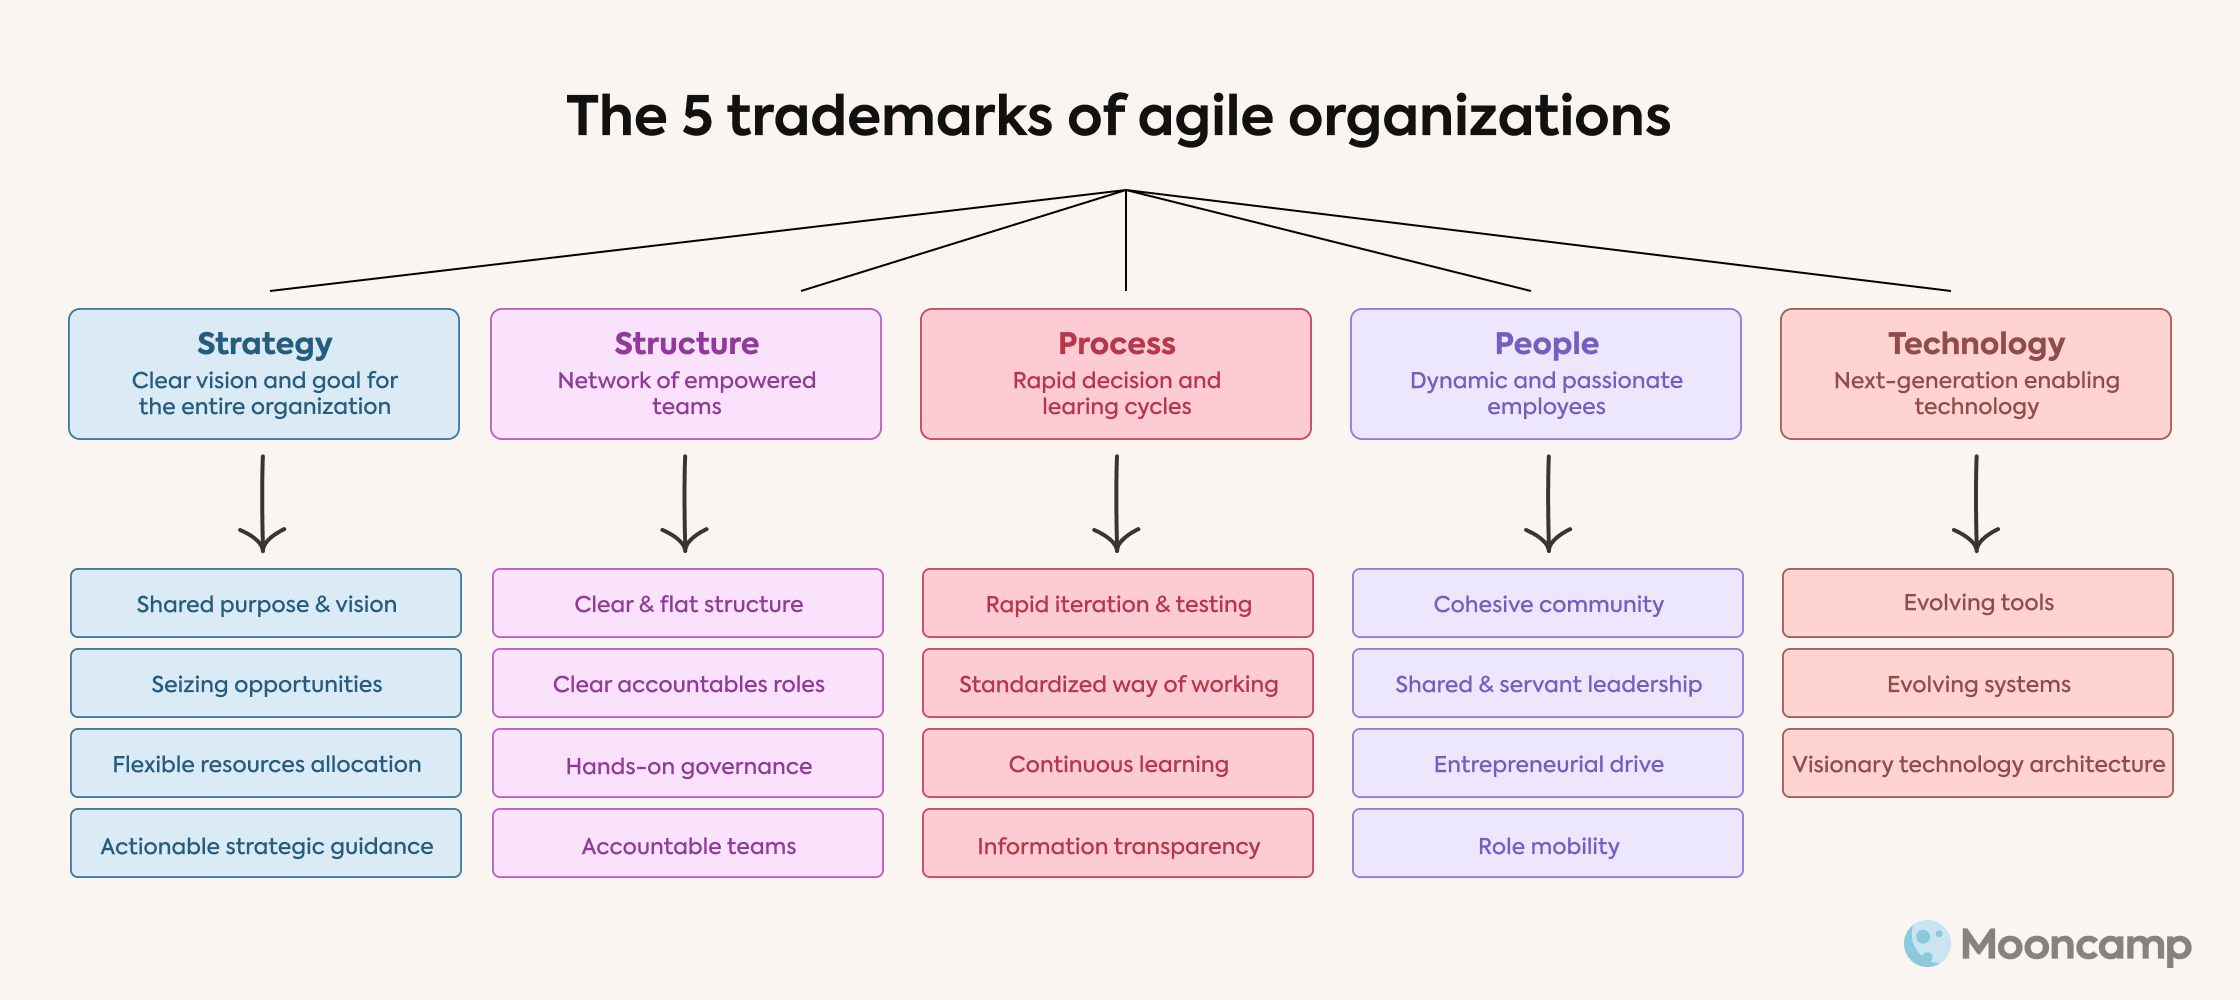 Characteristics of agile organizations